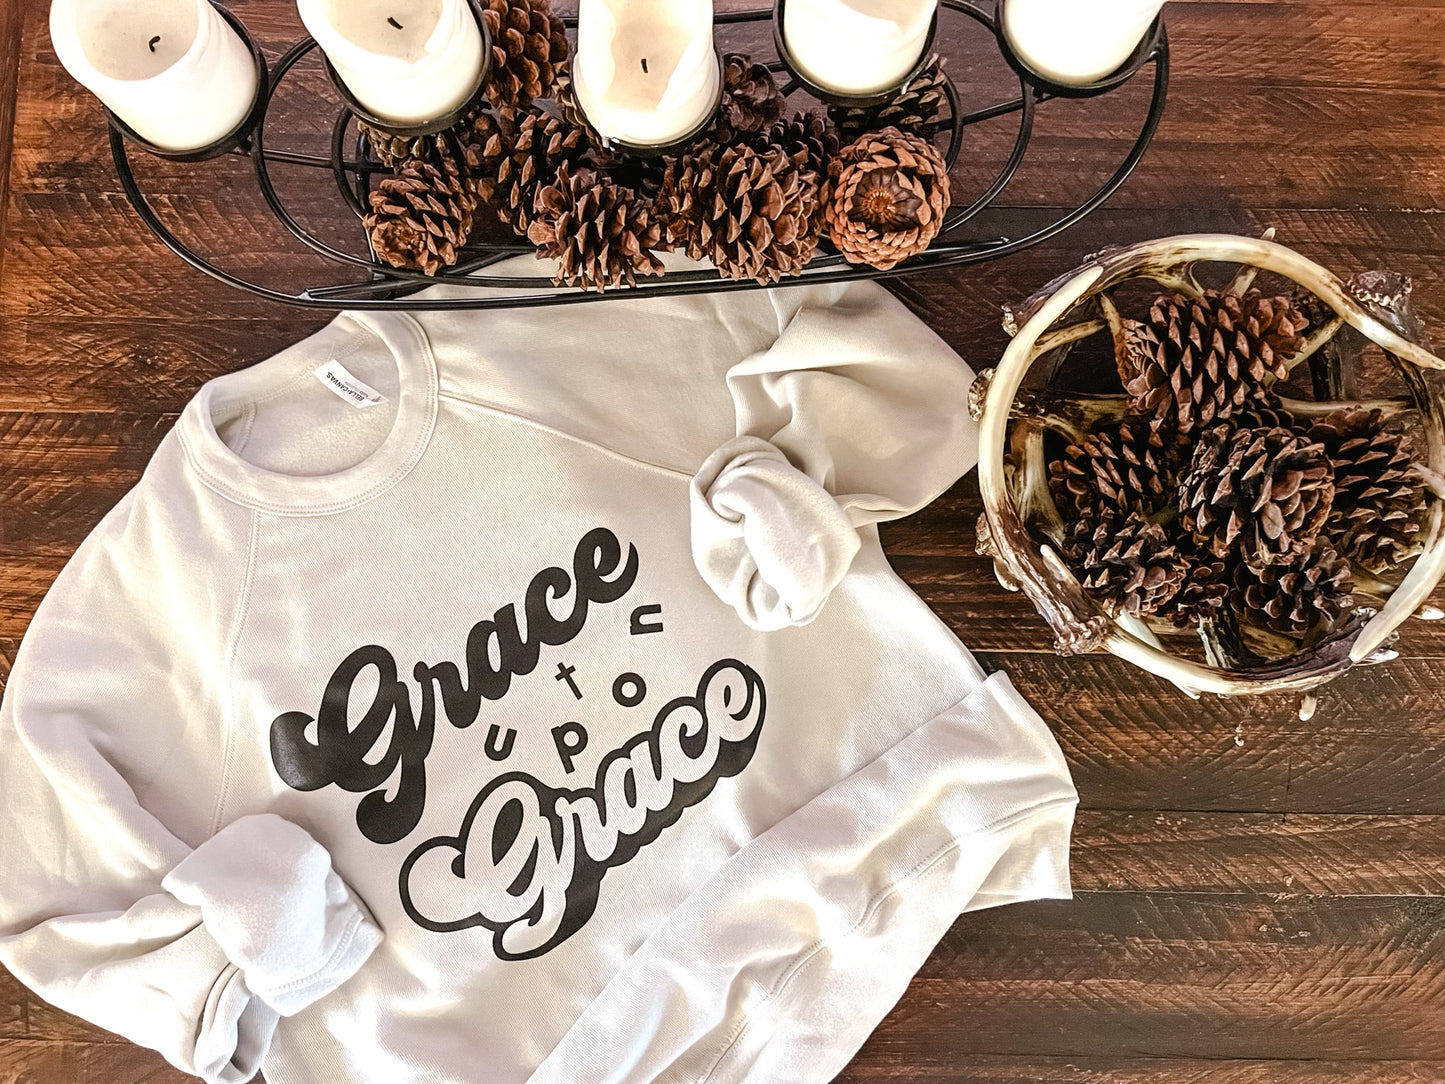 Grace Upon Grace Sweatshirt